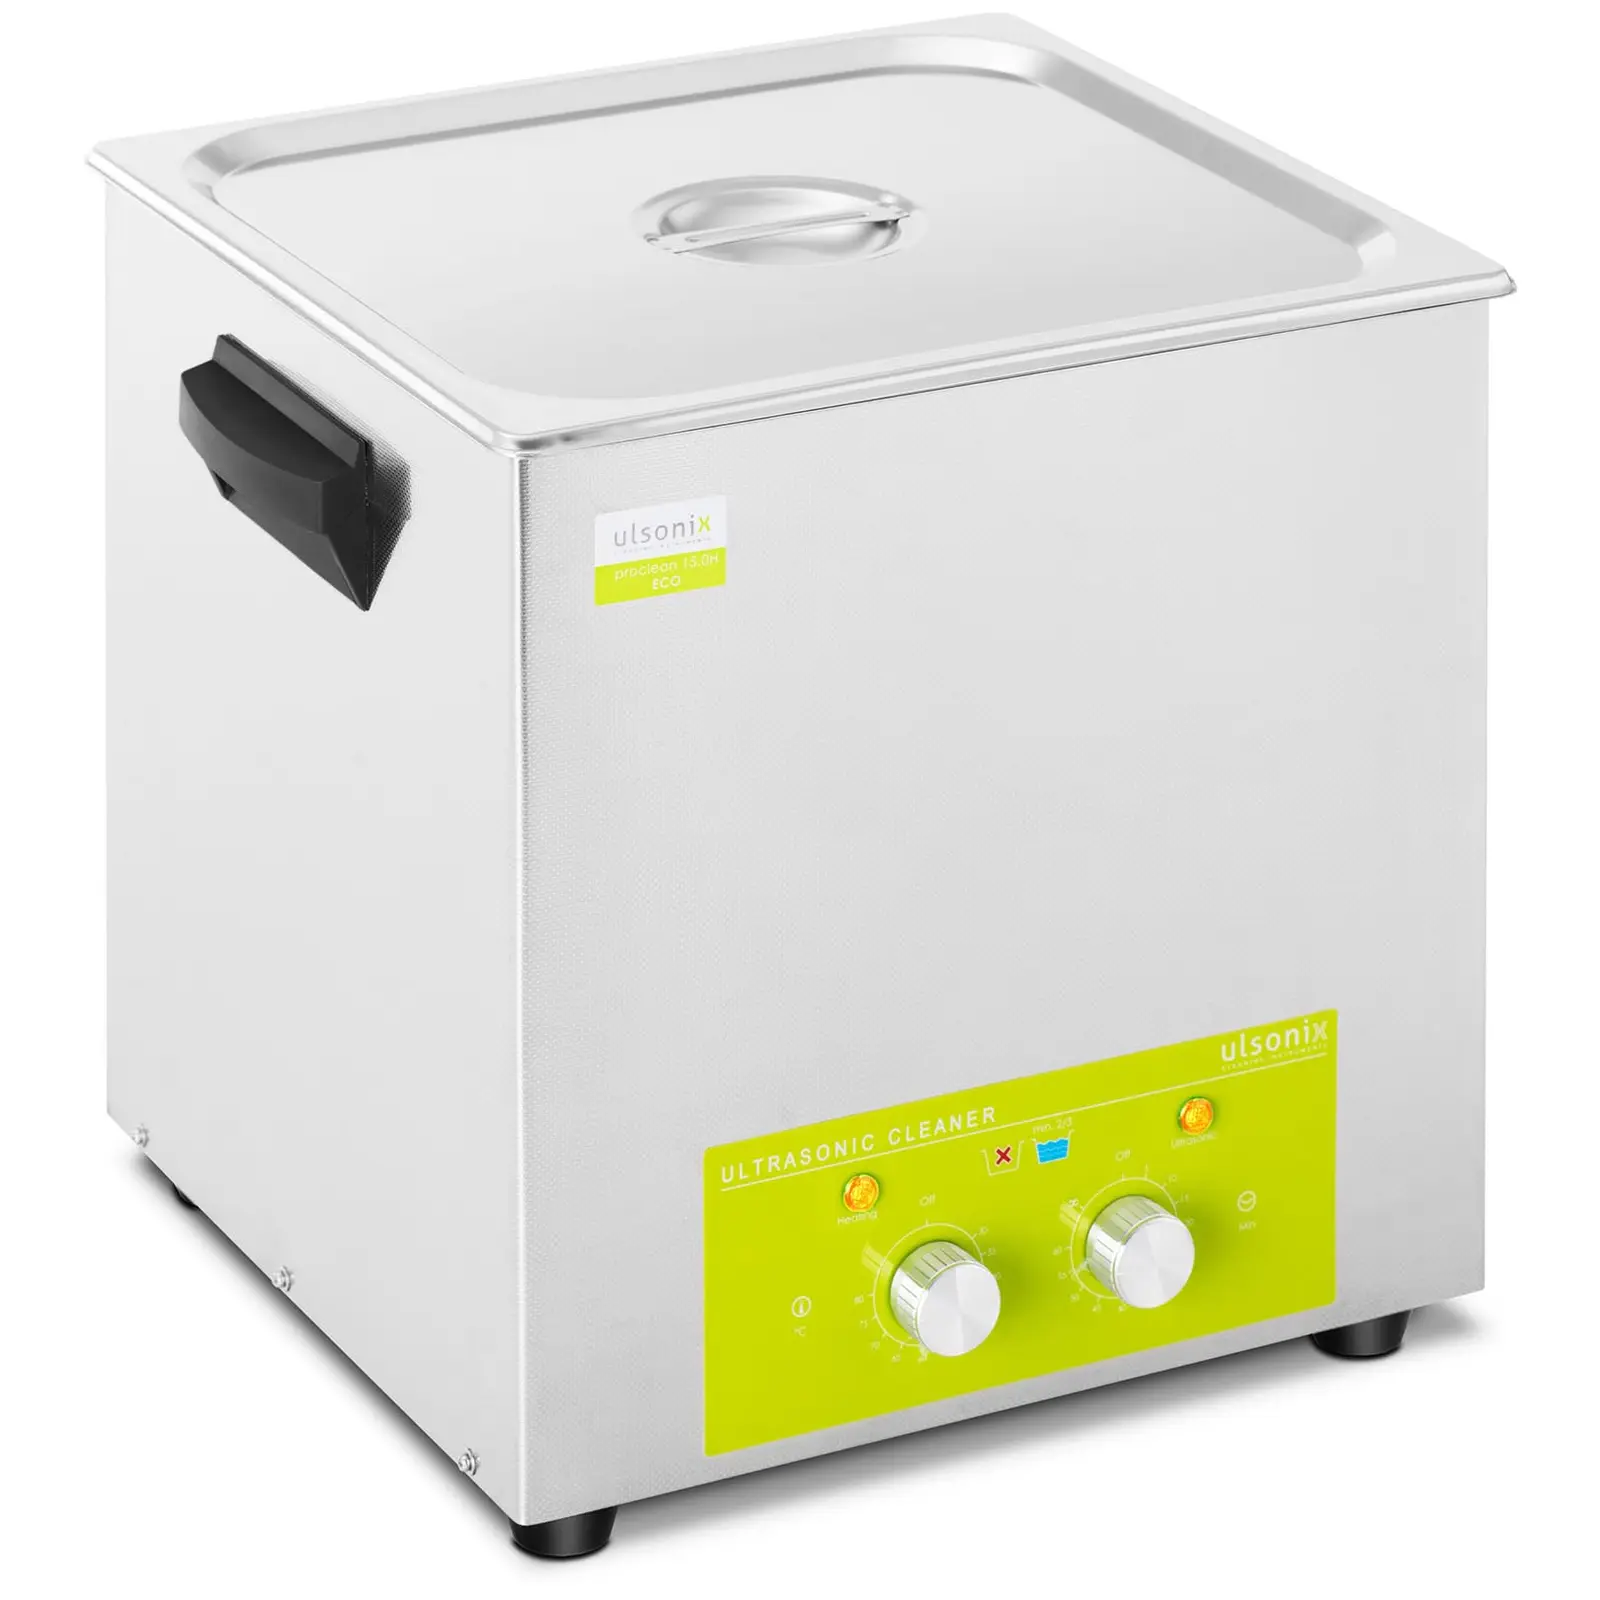 Nettoyeur à ultrasons- 15 litres - 240 W - Eco